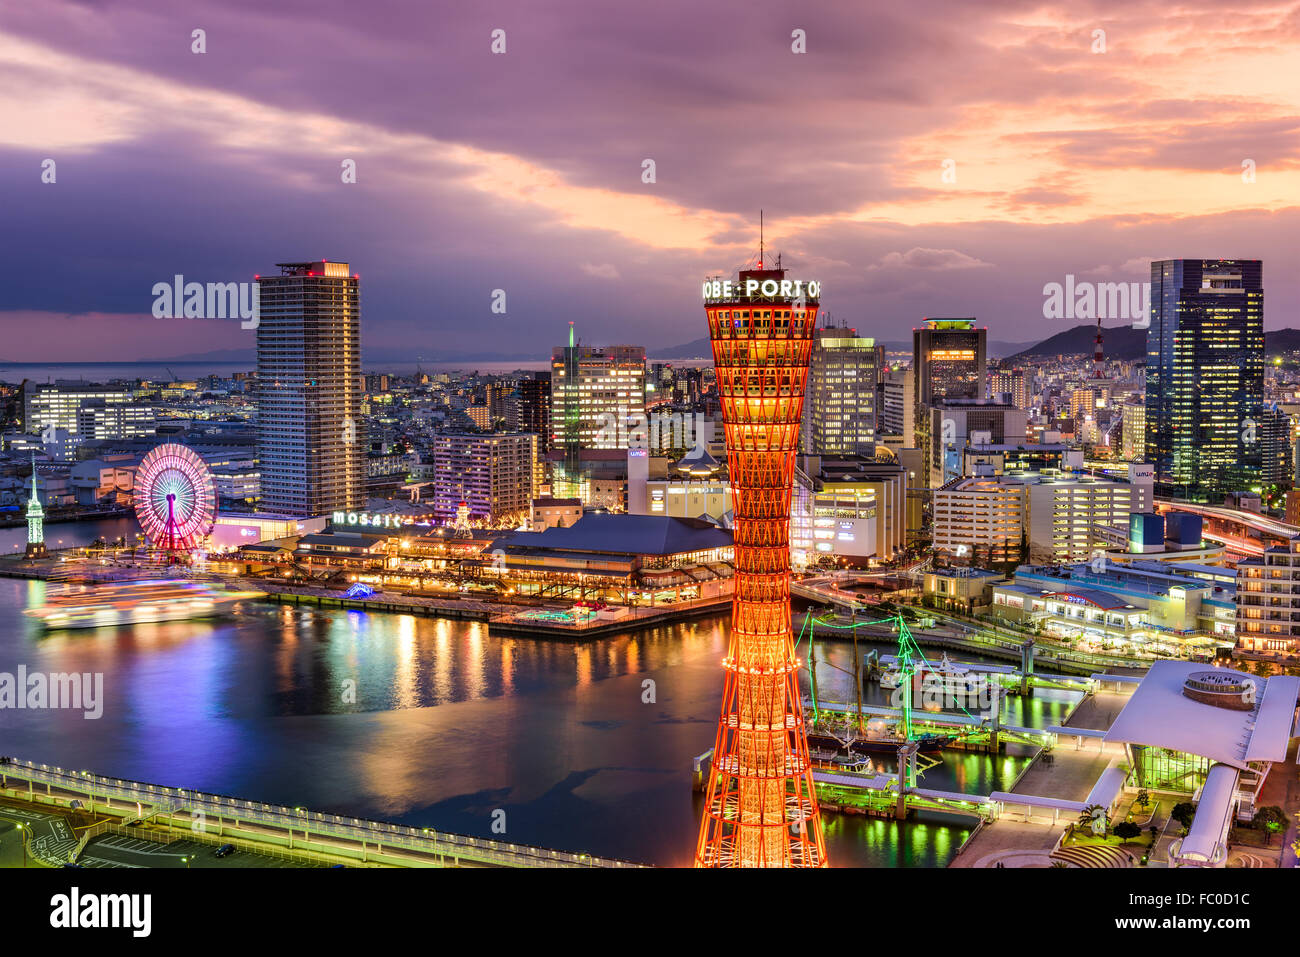 KOBE, JAPAN - DECEMBER 16, 2015: Port of Kobe, Japan with the landmark tower at dusk. Stock Photo